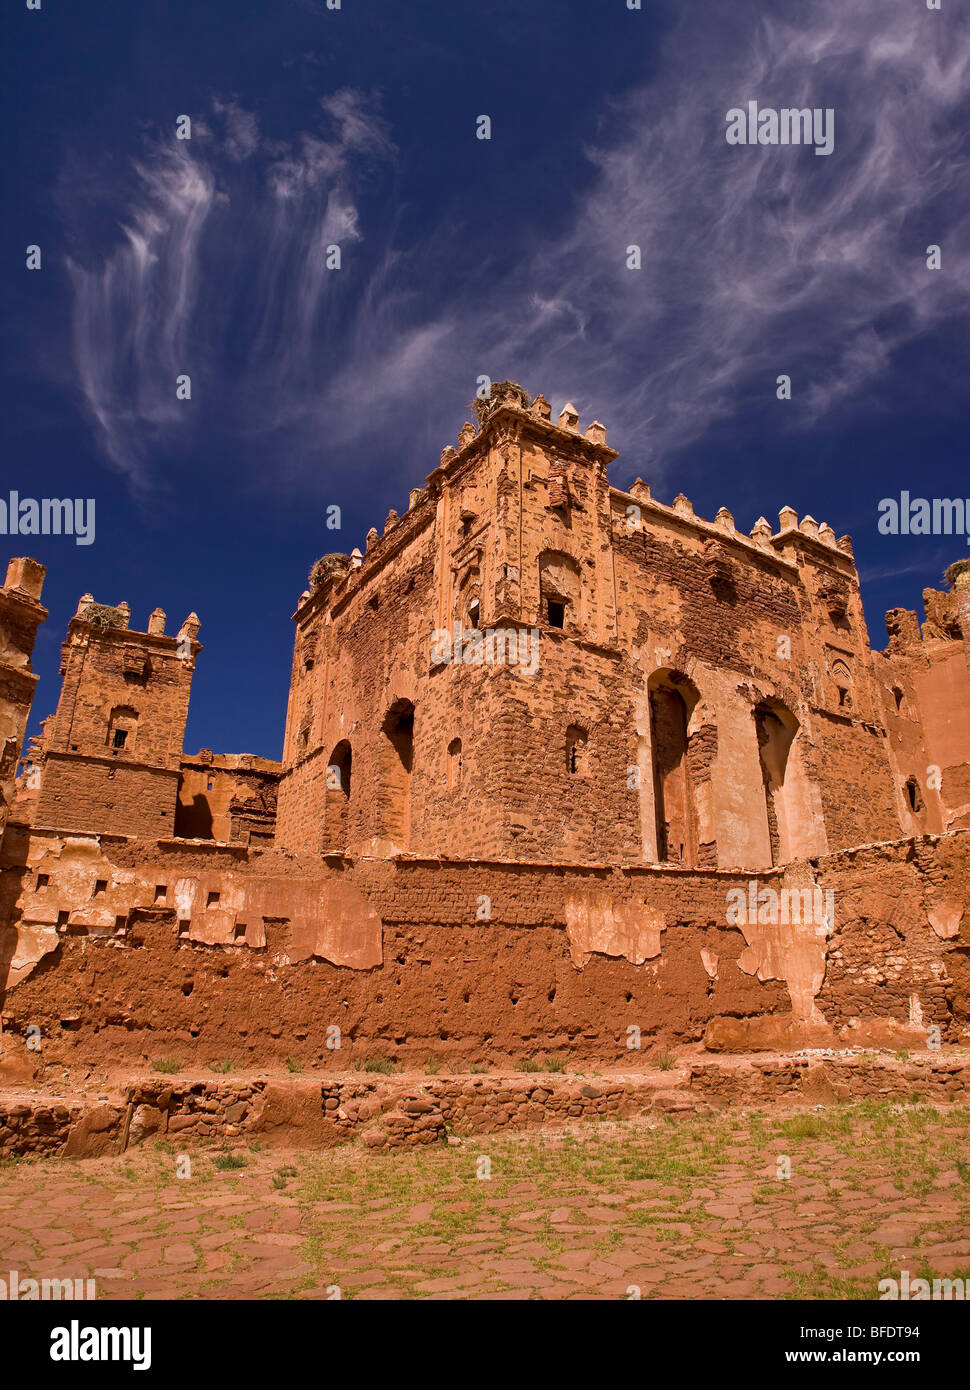 TELOUET, Marocco - Le rovine del Glaoui kasbah, nelle montagne Atlas. Foto Stock